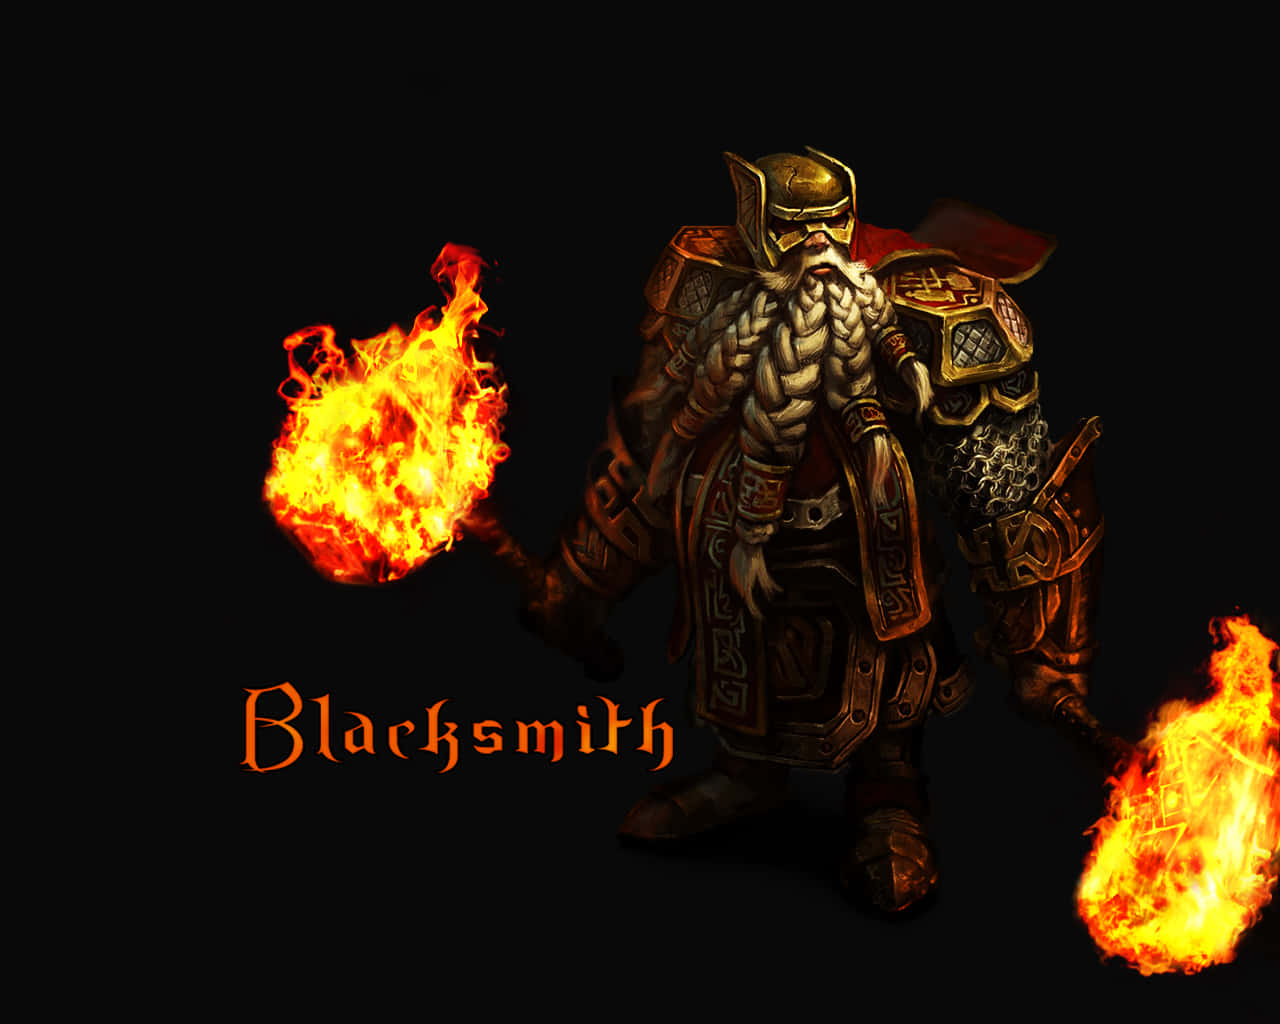 "The Blacksmith's Forge" Wallpaper